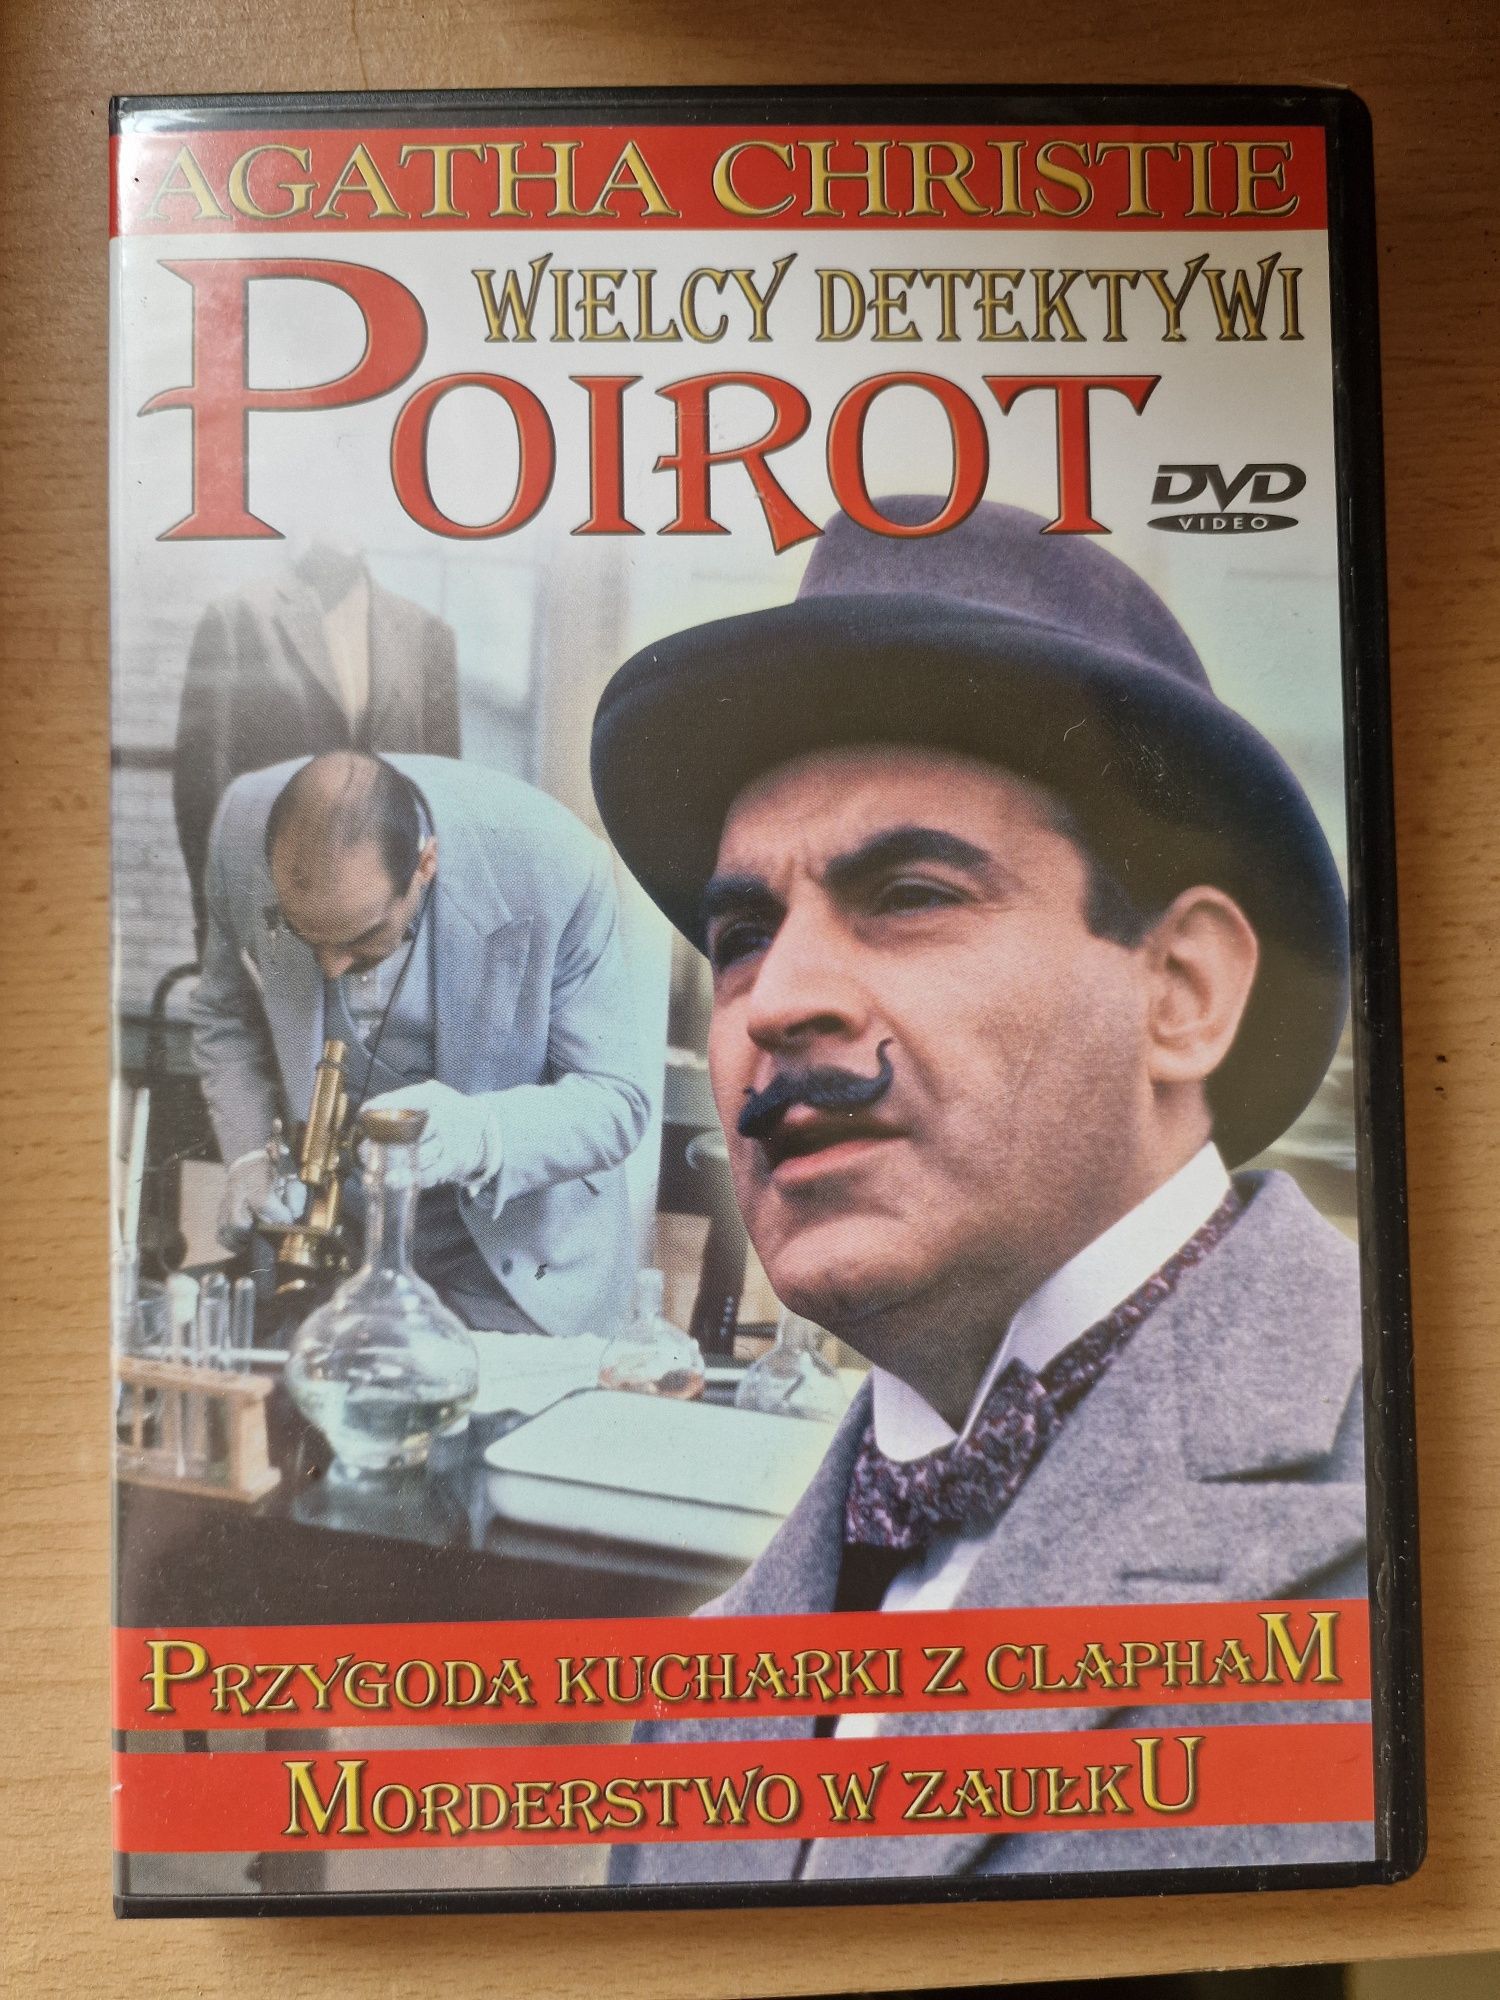 Agatha Christie Poirot kolekcja 30 x film DVD